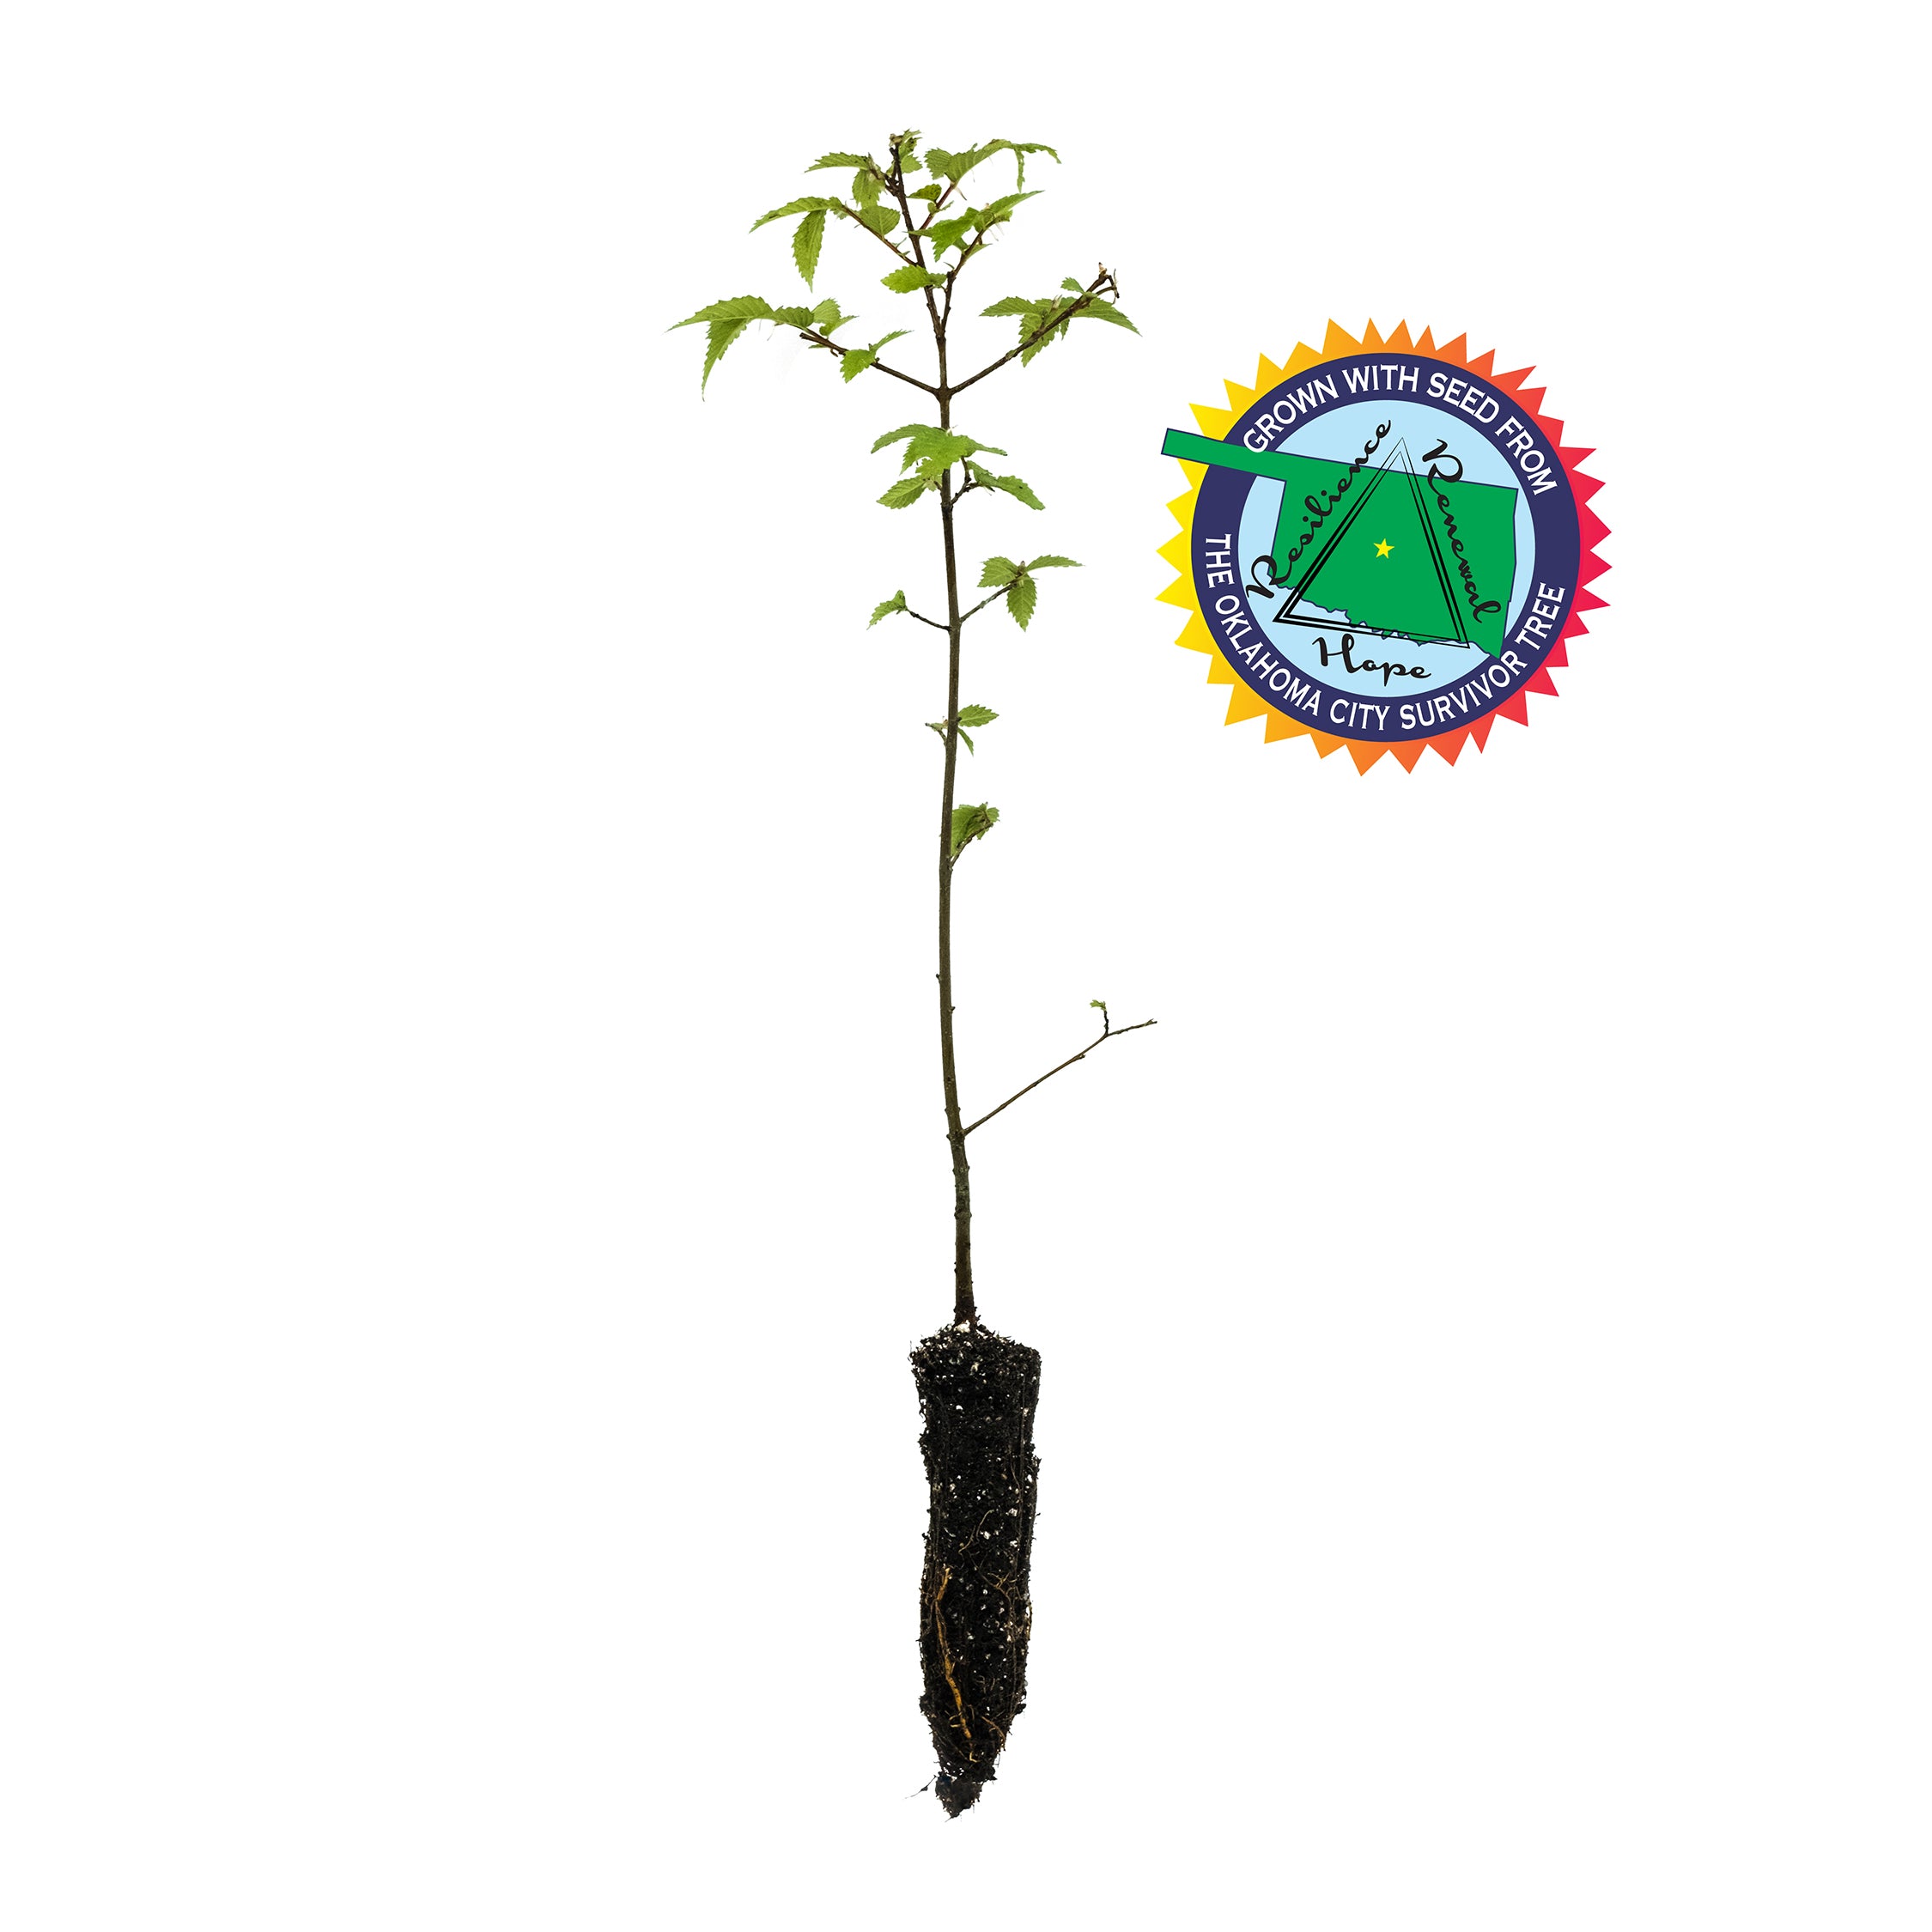 Planting of Survivor Tree Sapling in Boston - Tree Topics